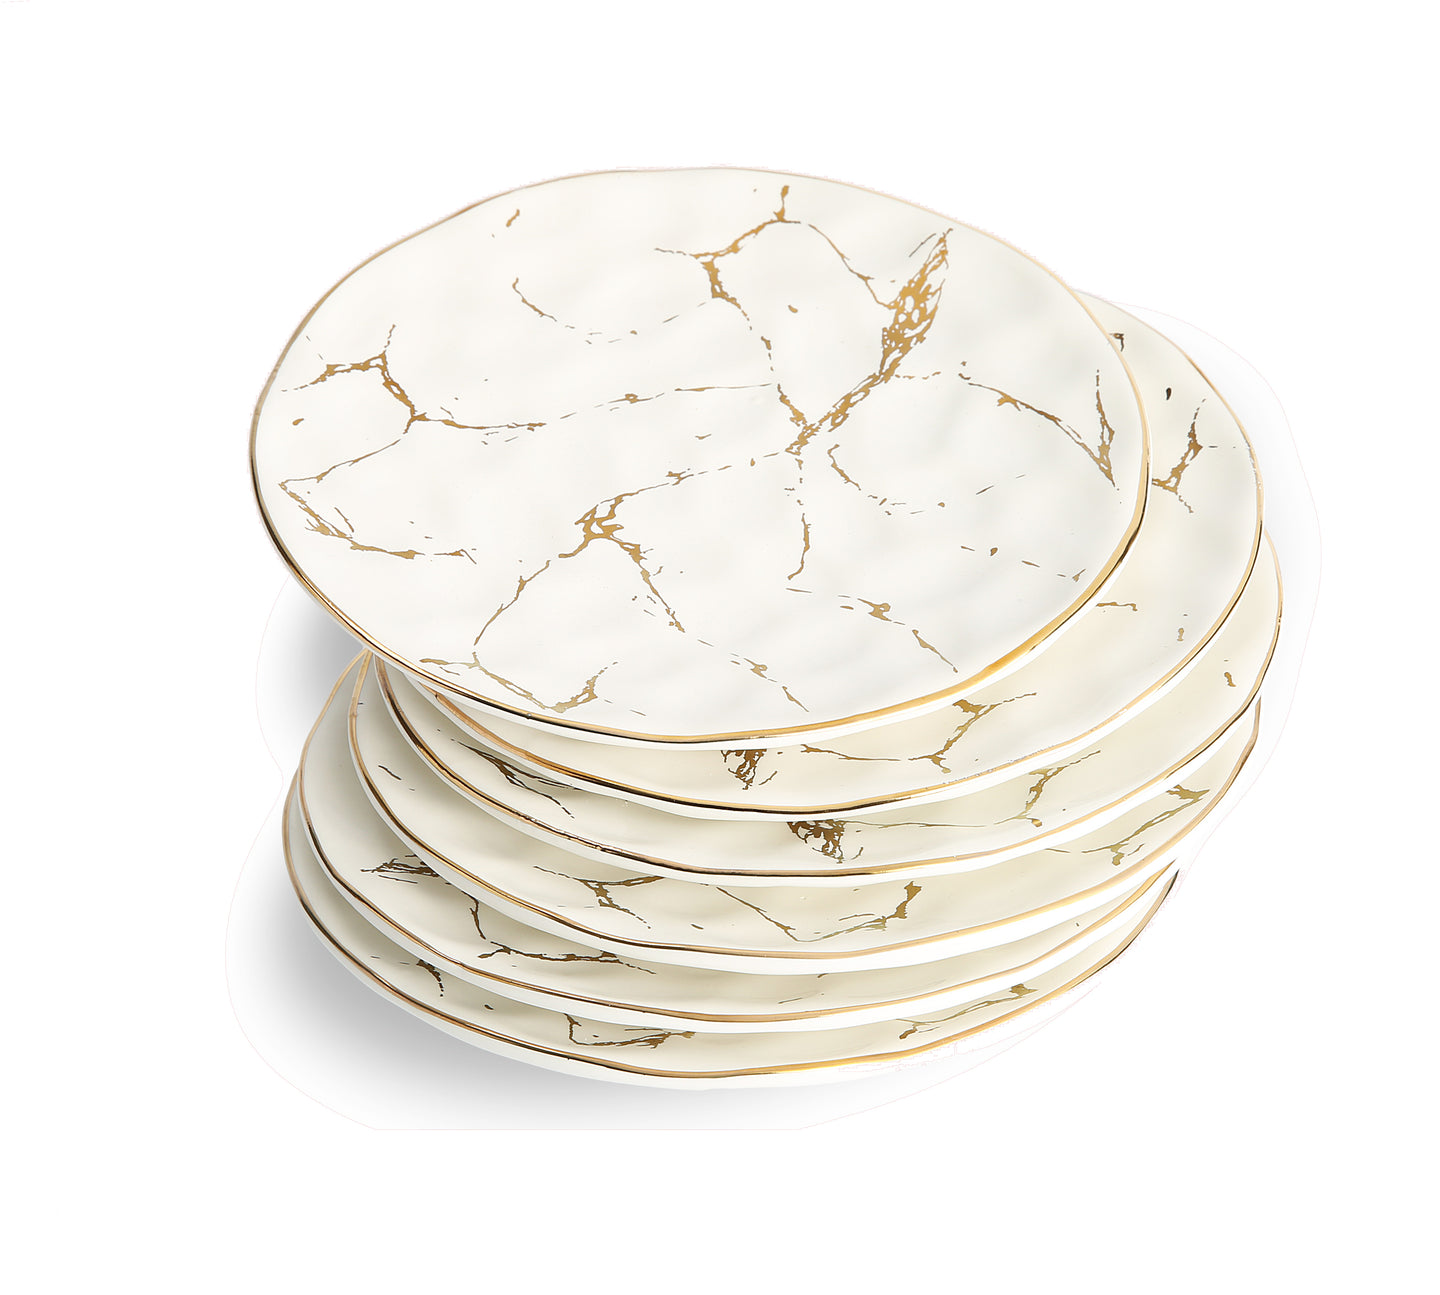 Set Of 4 White Porcelain Salad Plates With Gold Design